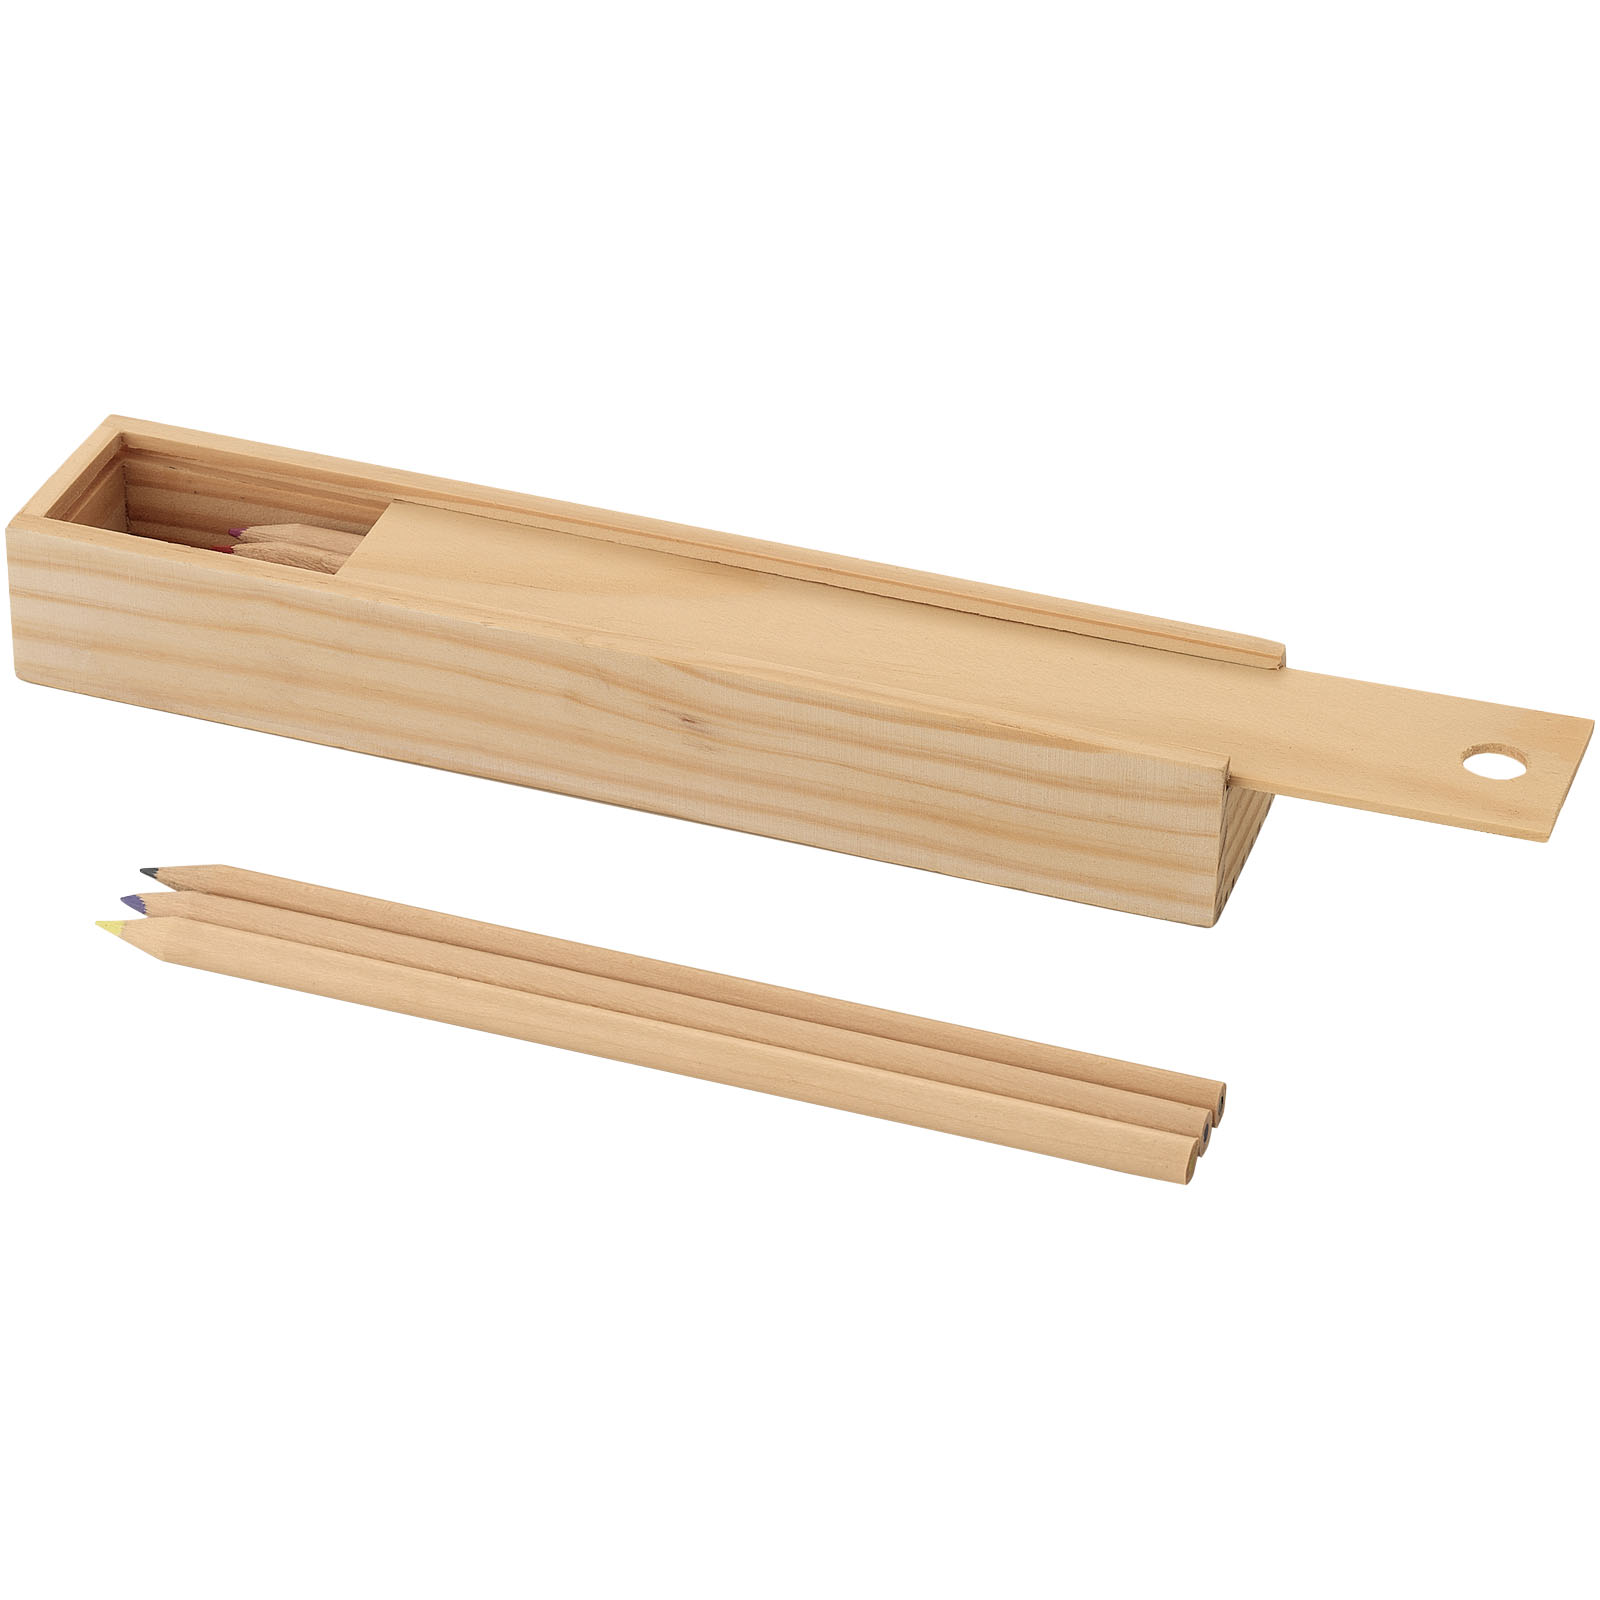 Pencils - Pines 12-piece wooden pencil set